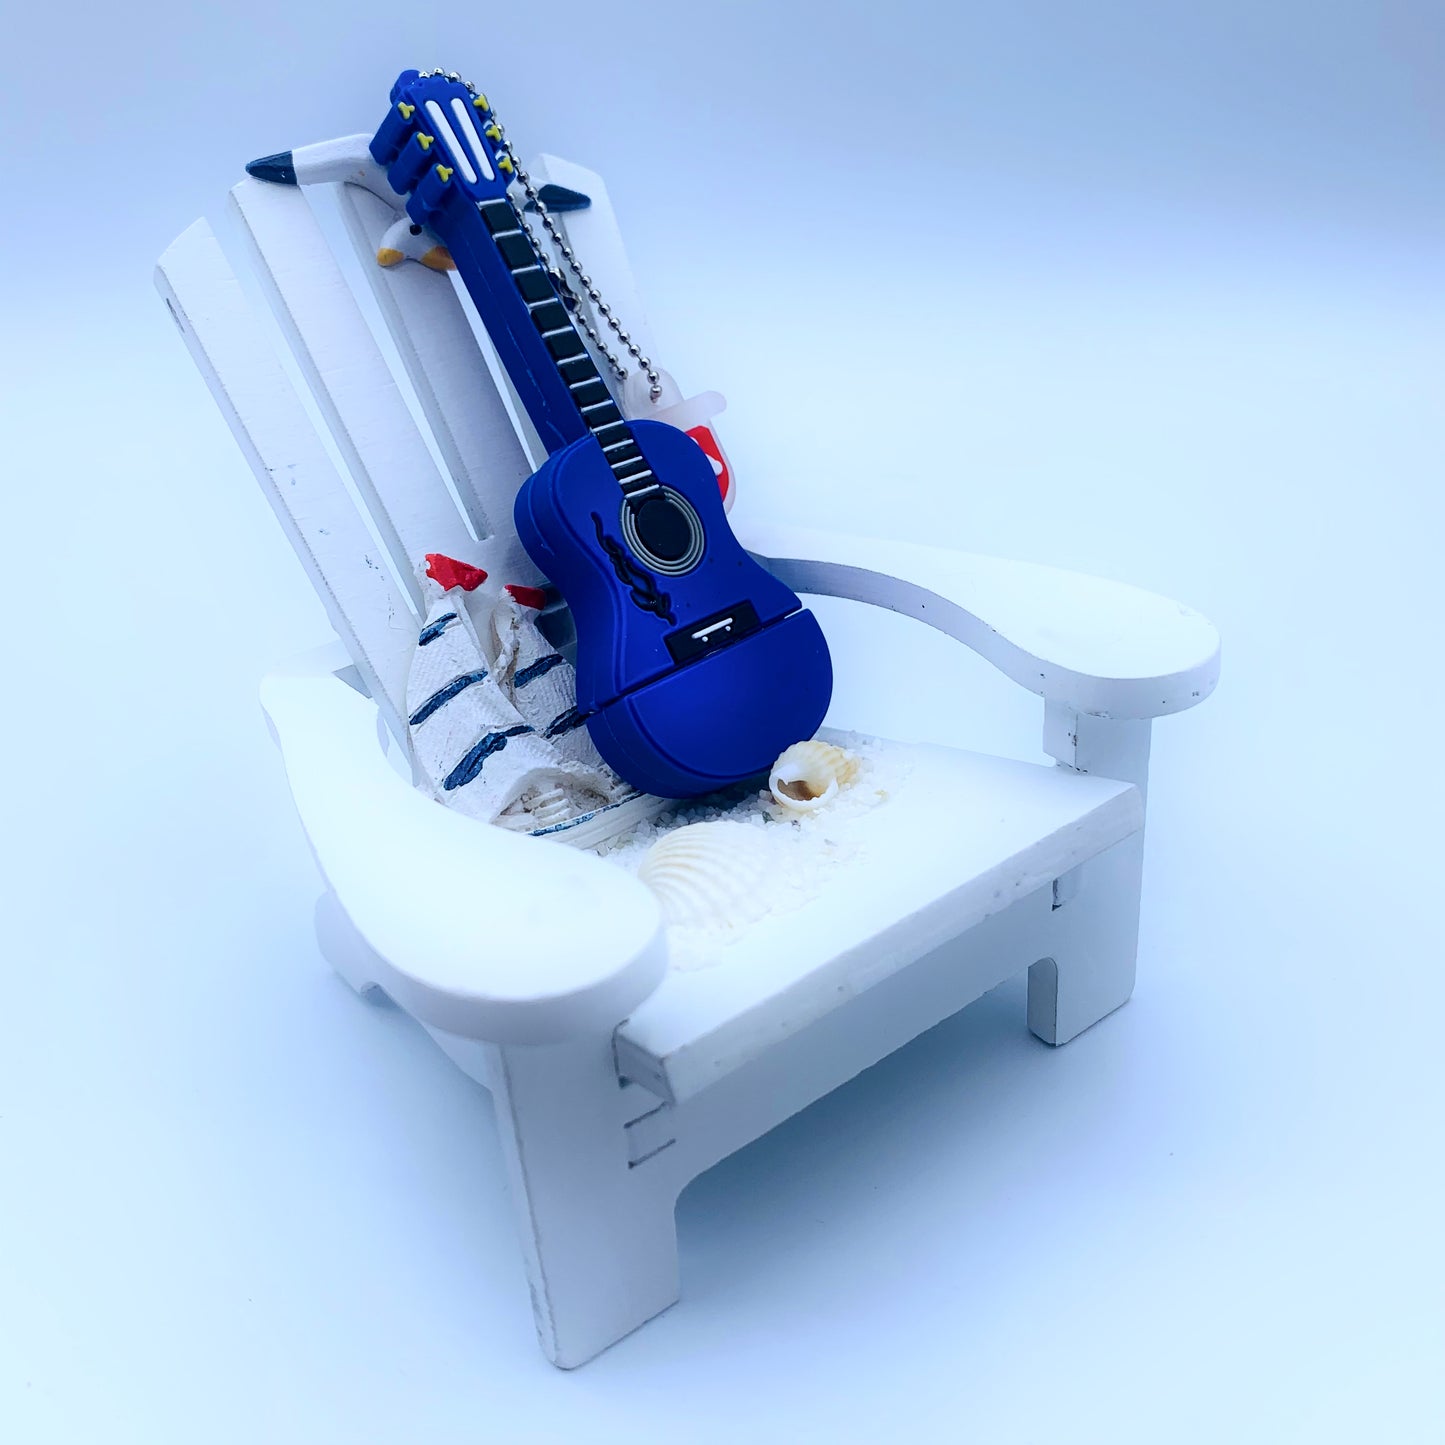 azure guitar